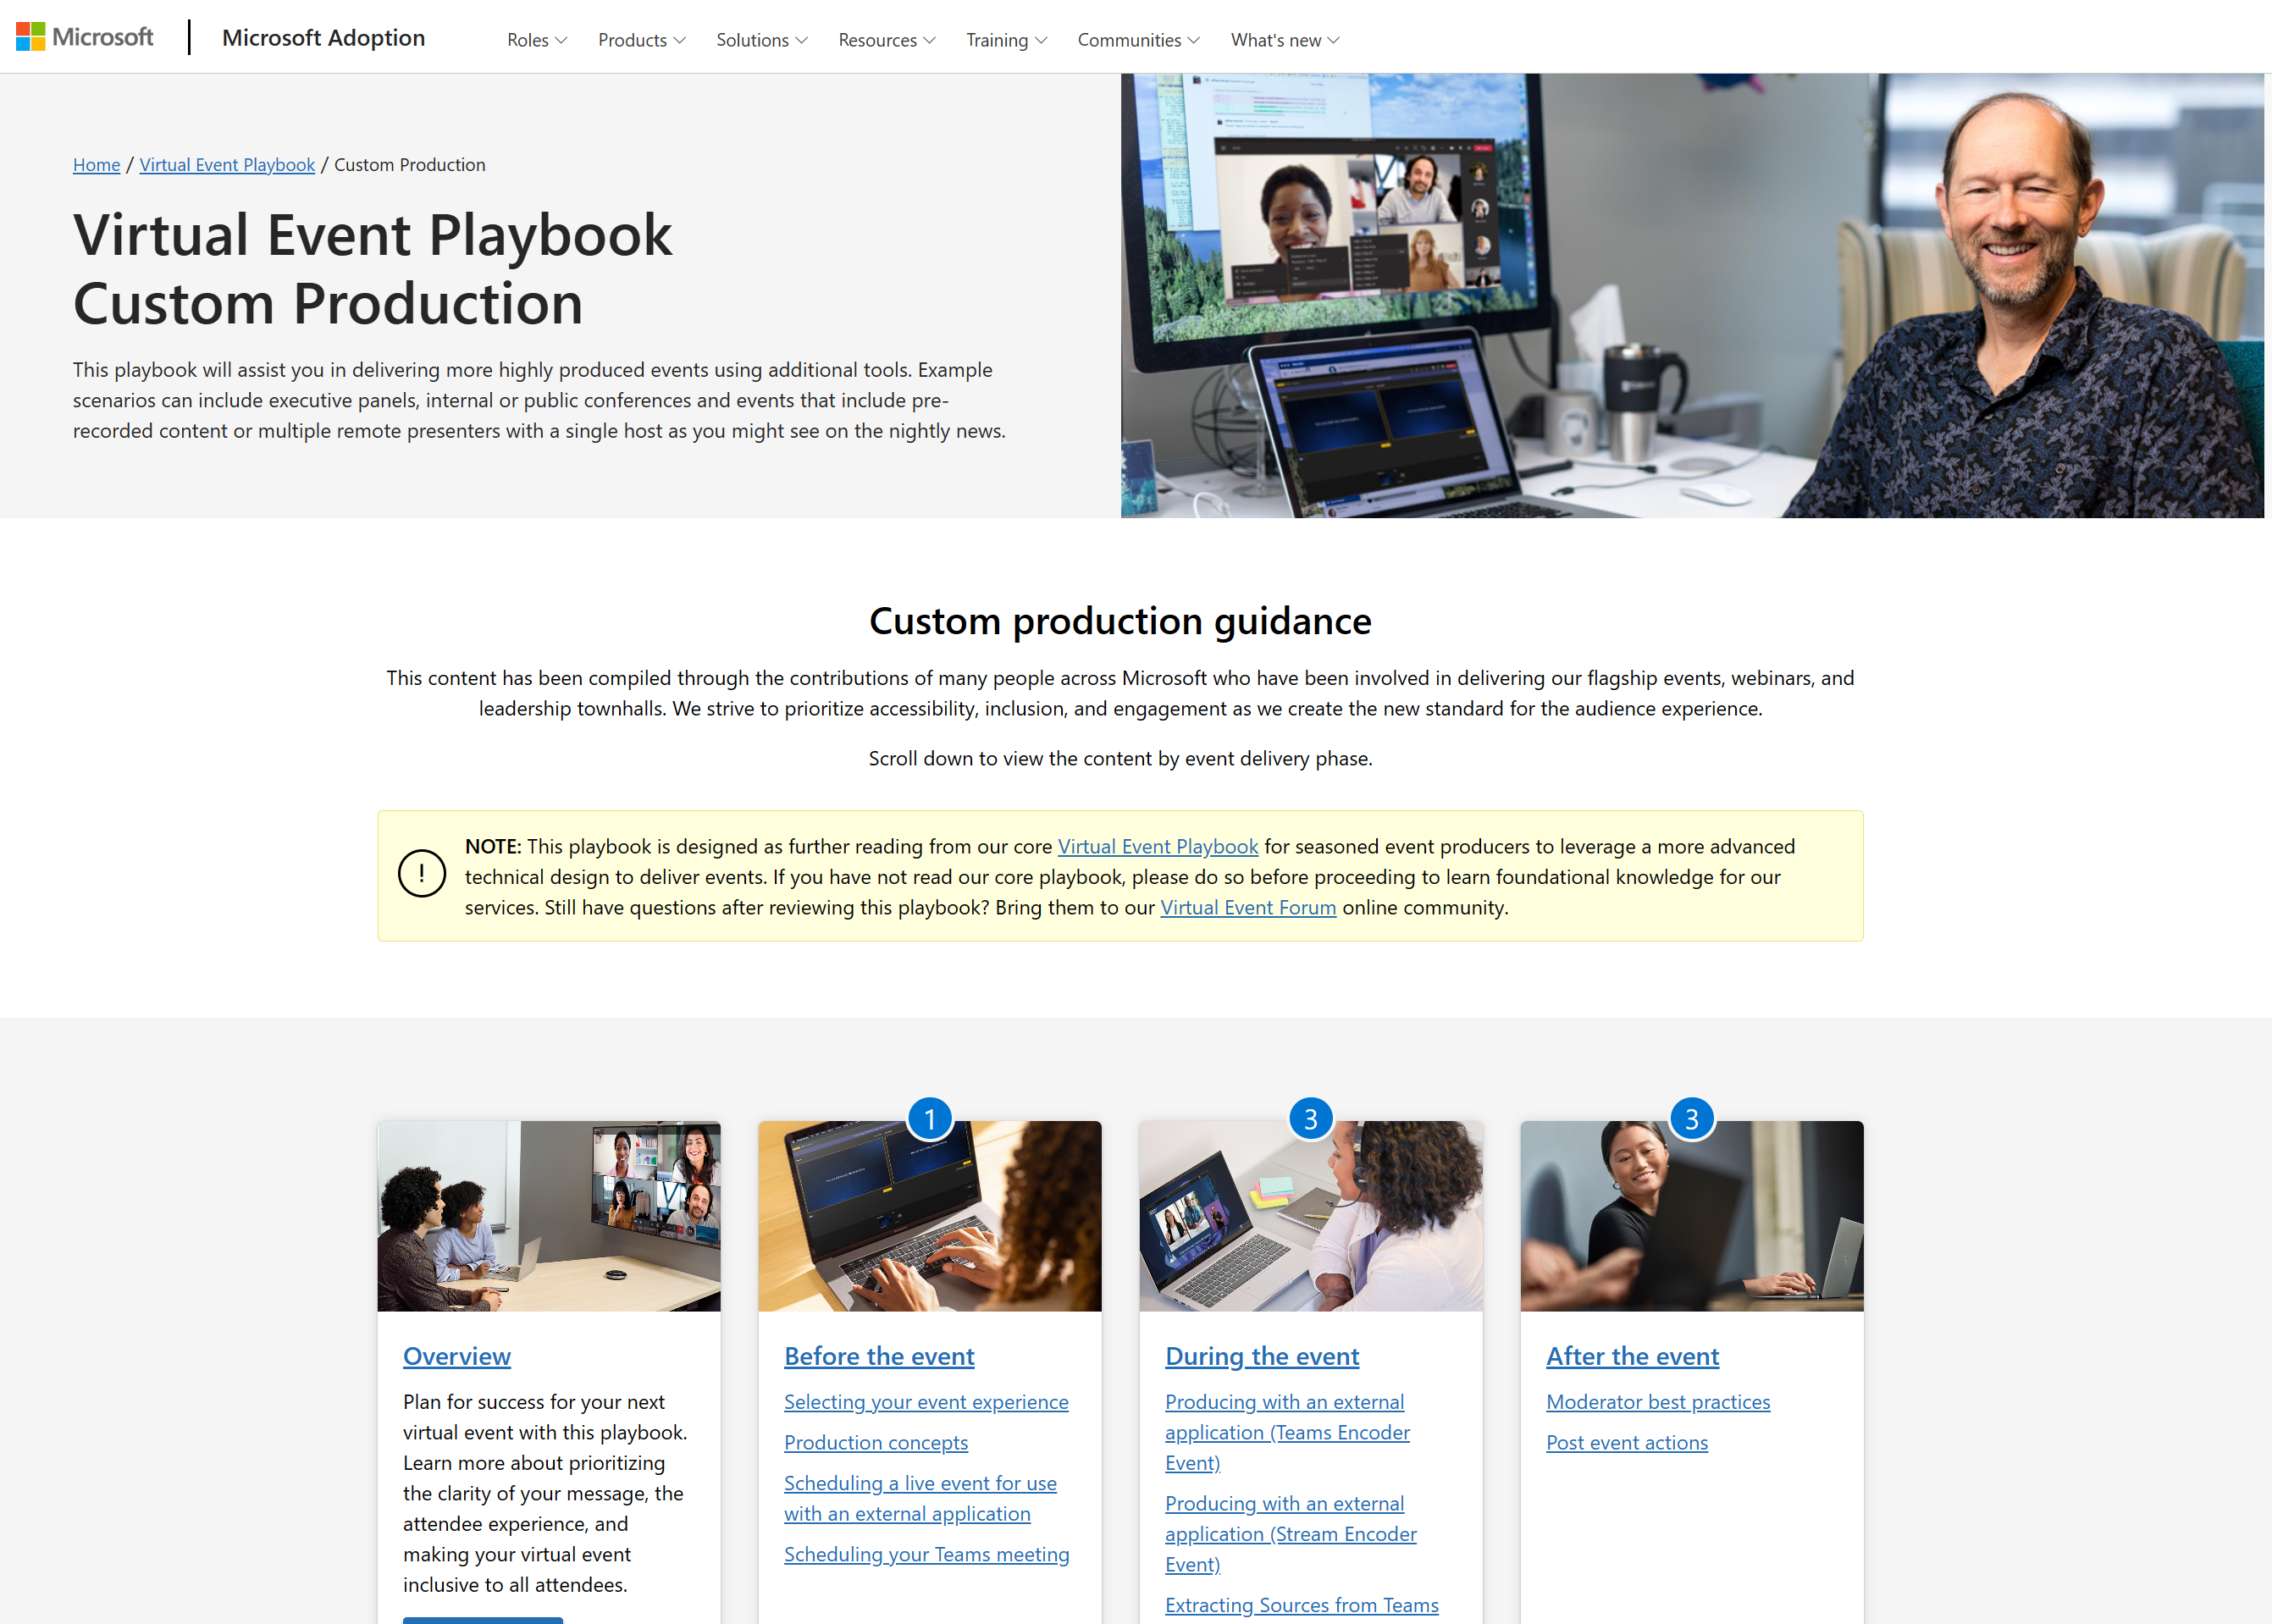 Custom Production Virtual Event Playbook screenshot